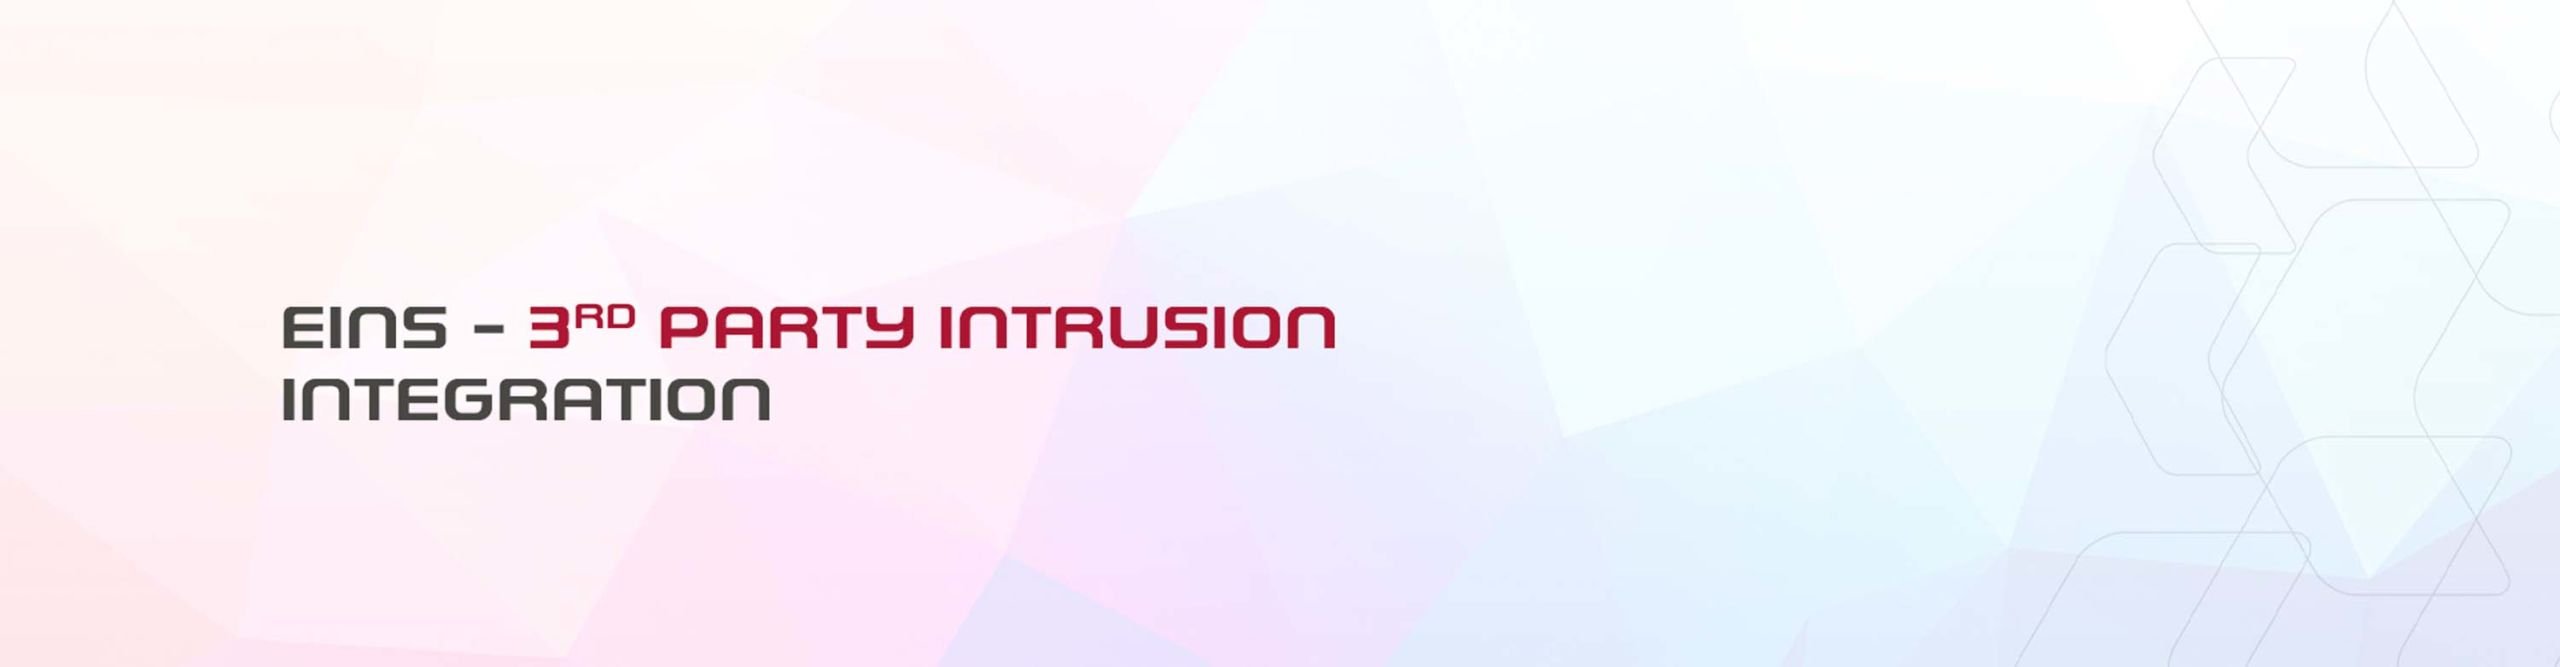 EINS- 3rd party intrusion integration